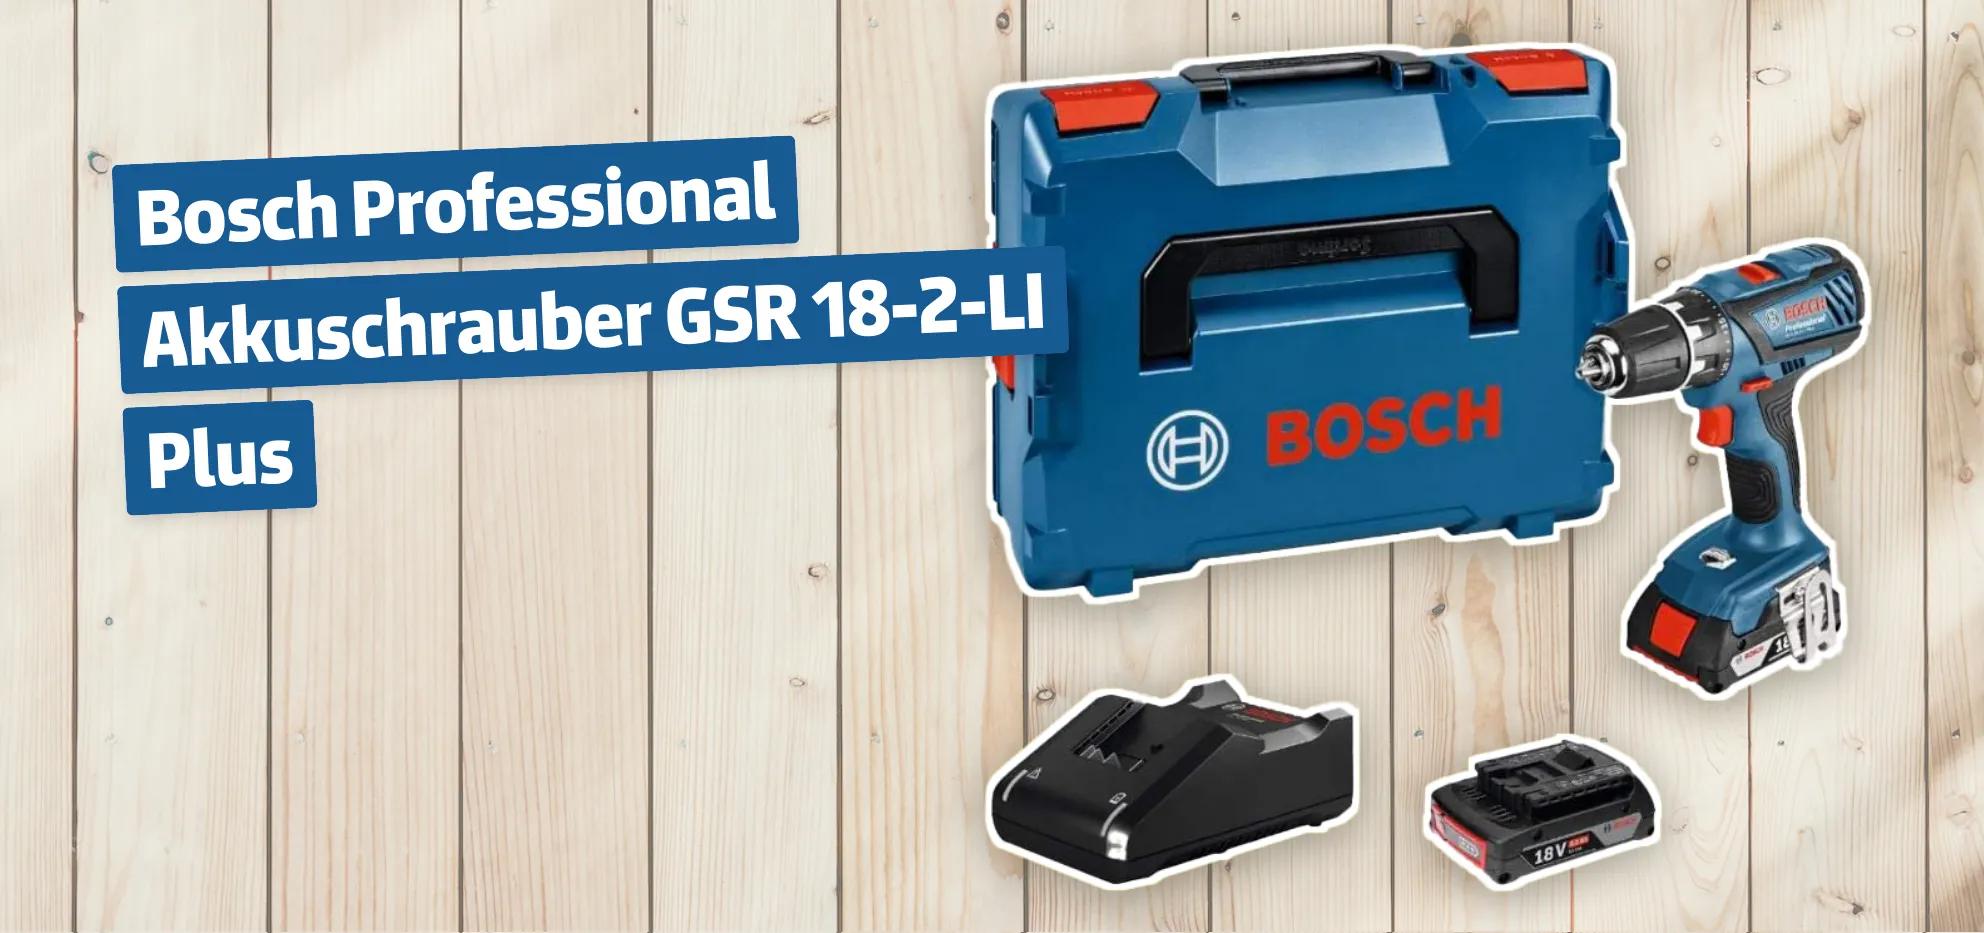 Bosch Professional Akkuschrauber GSR 18-2-LI Plus